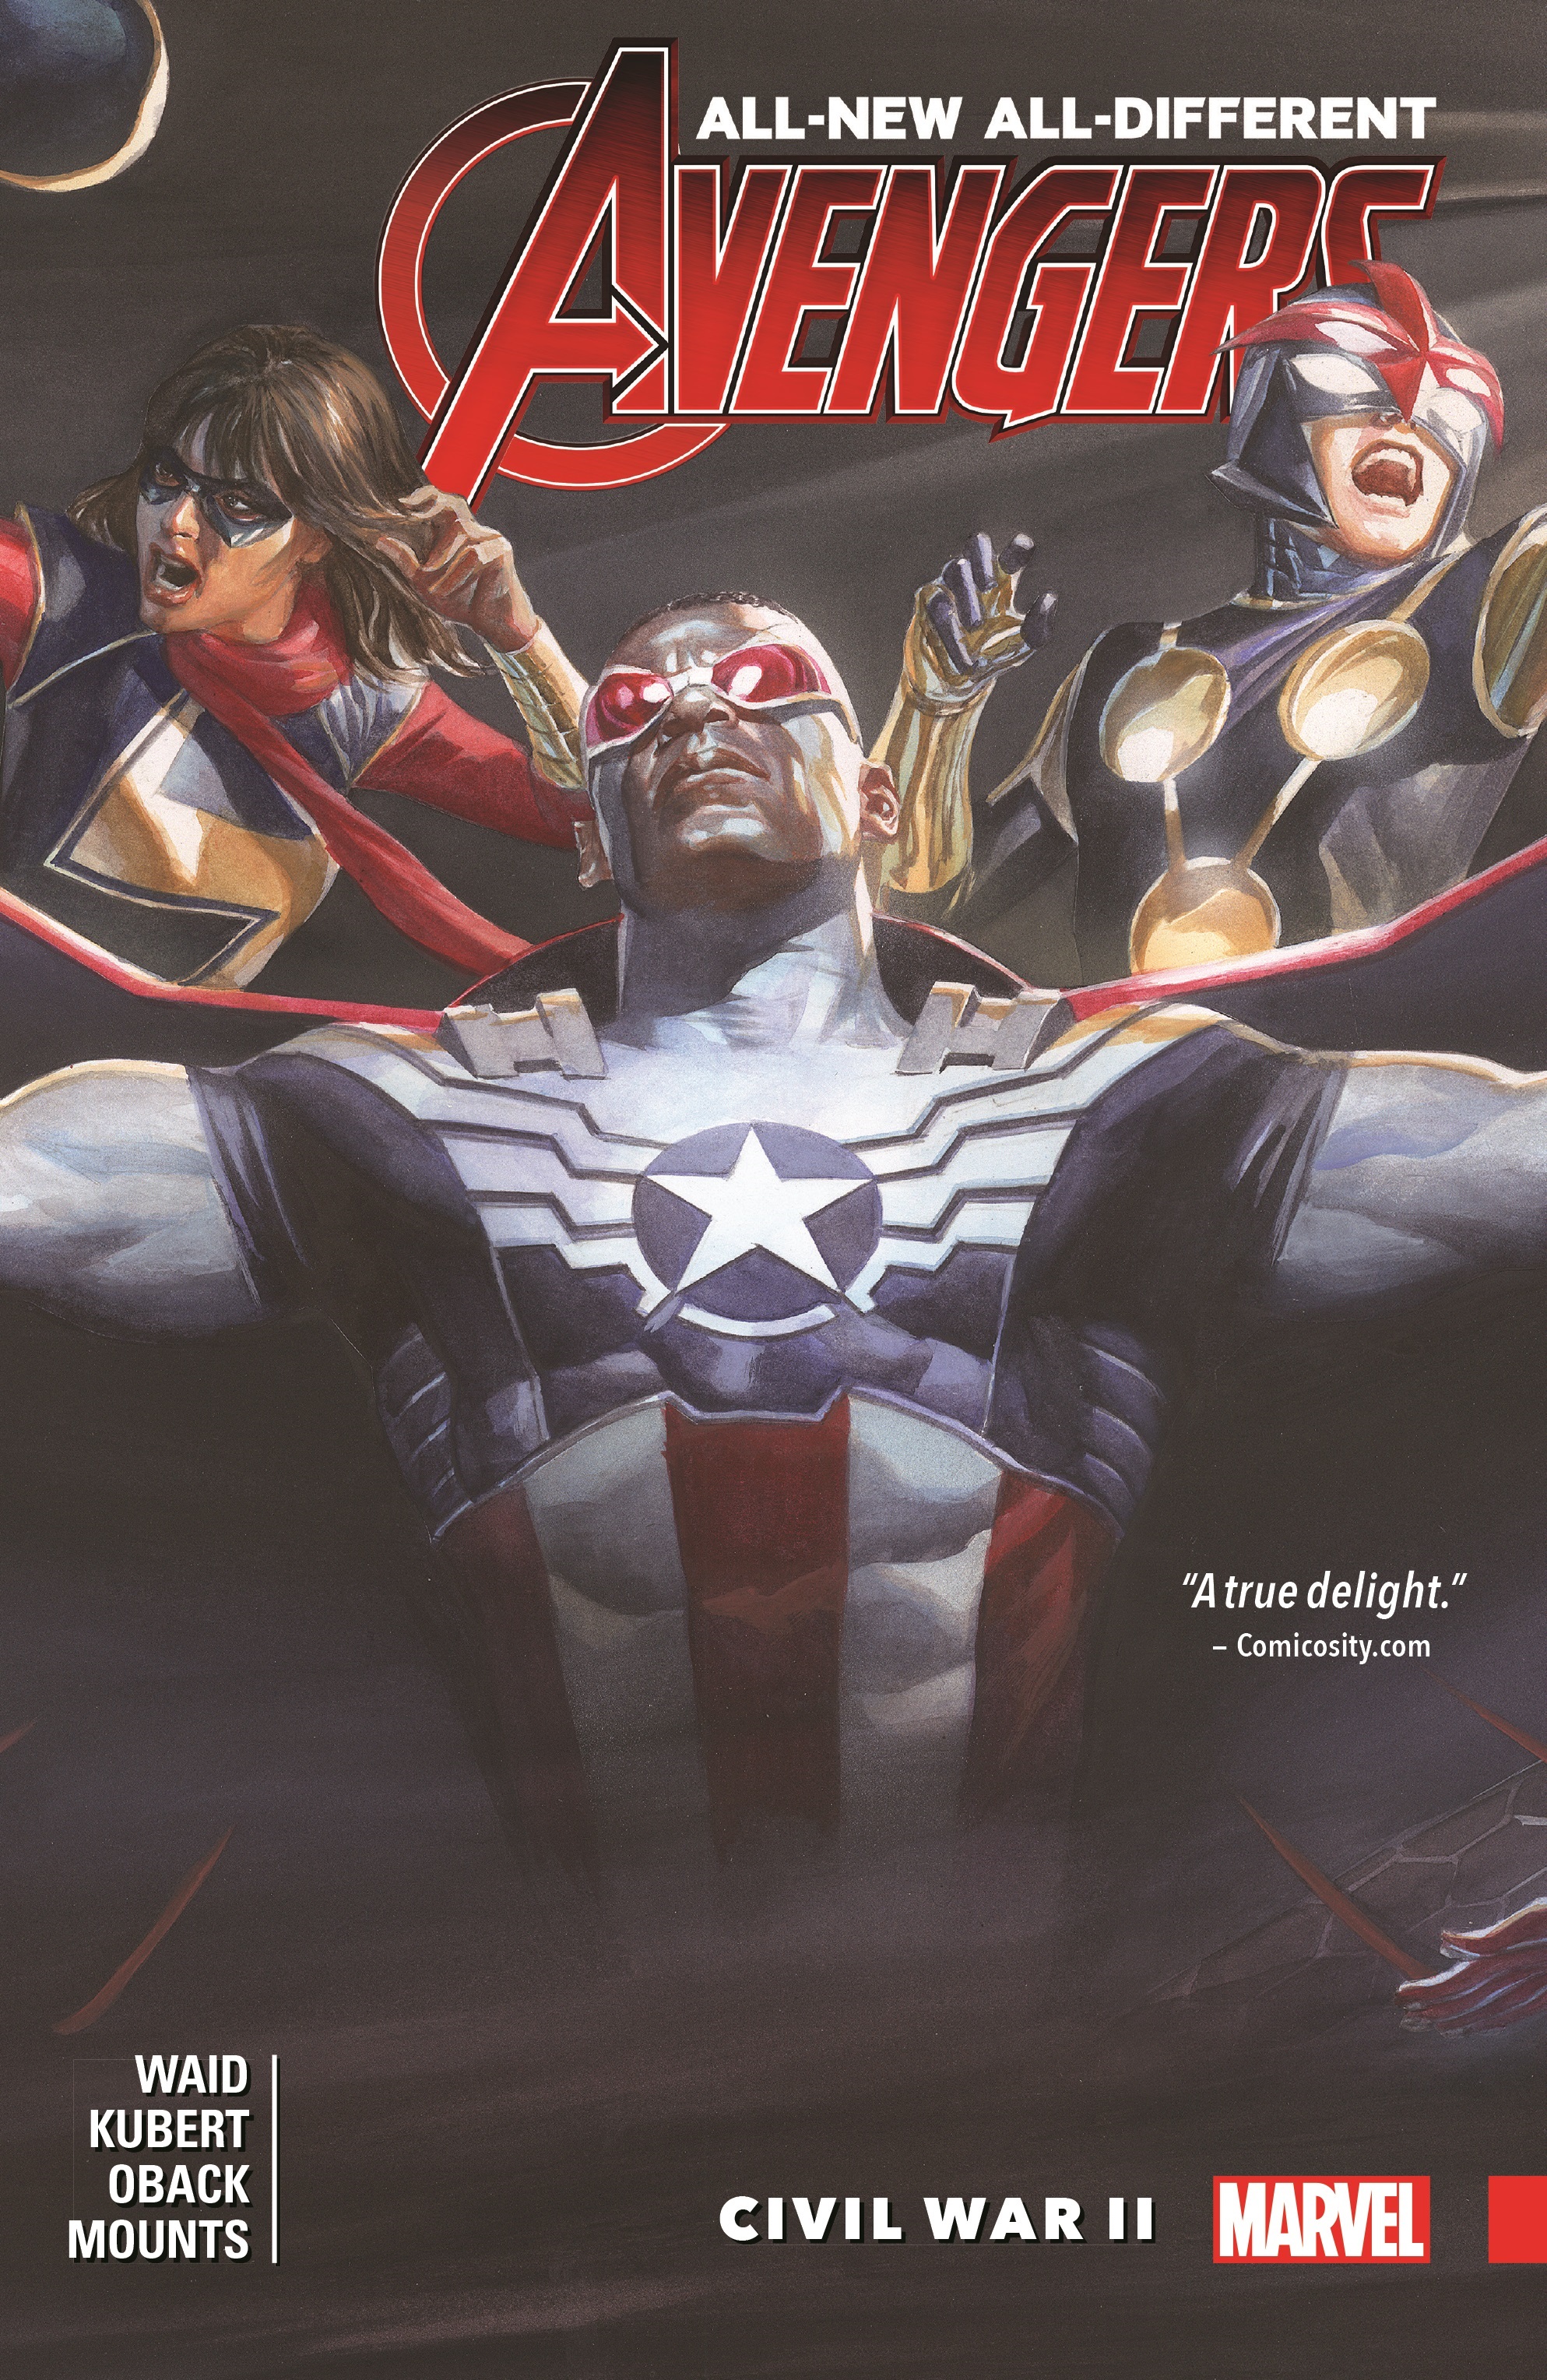 All-New, All-Different Avengers Vol. 3: Civil War II (Trade Paperback)